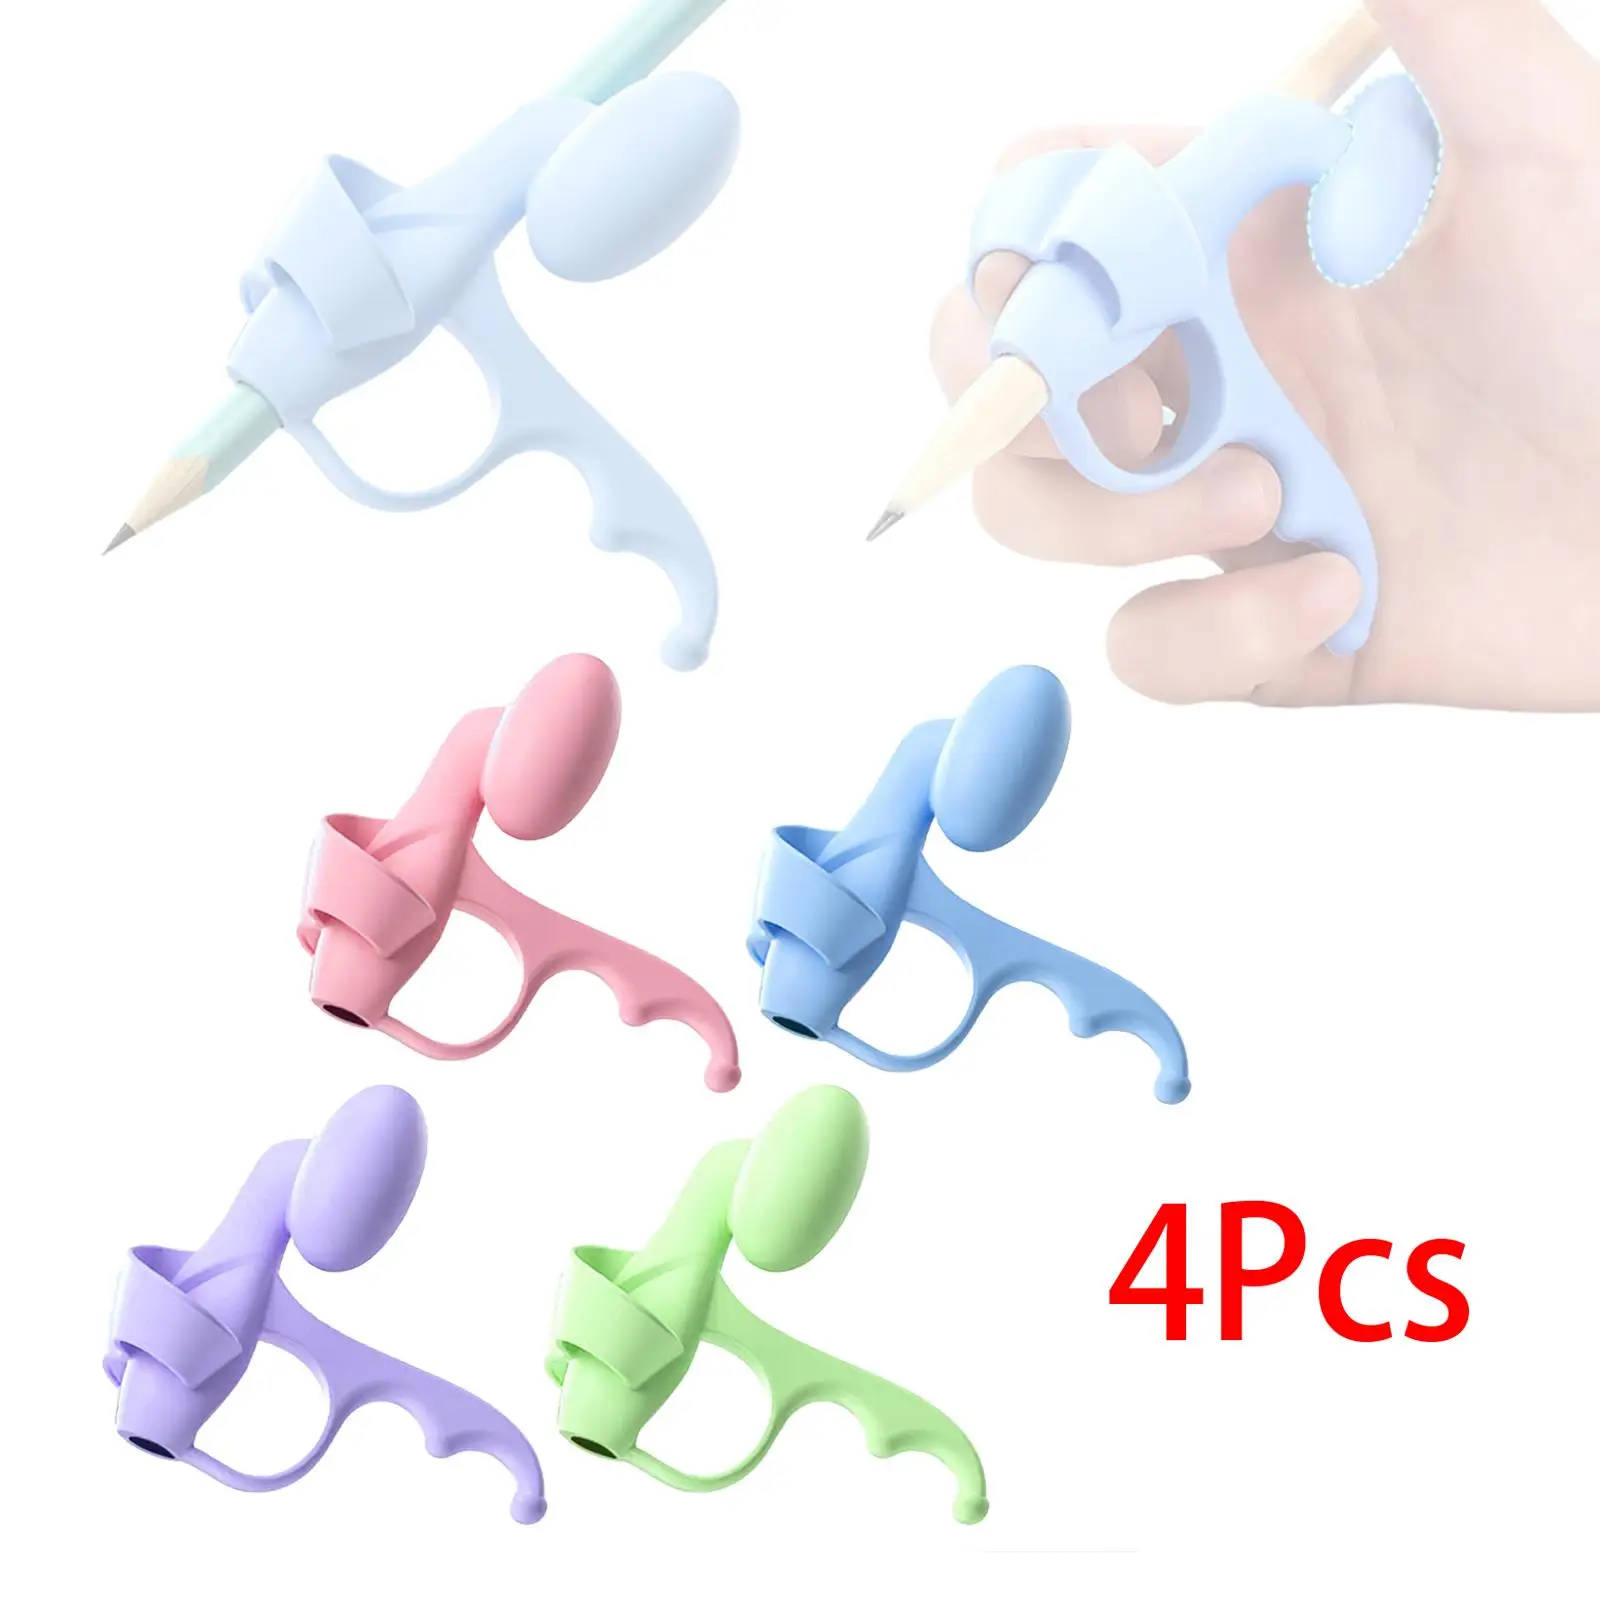 4Pcs Writing Aid Grip Soft Silicone Corrector Writing Tool Pencil Holder Grip Pen Grip for Kids Boys Girls Preschoolers